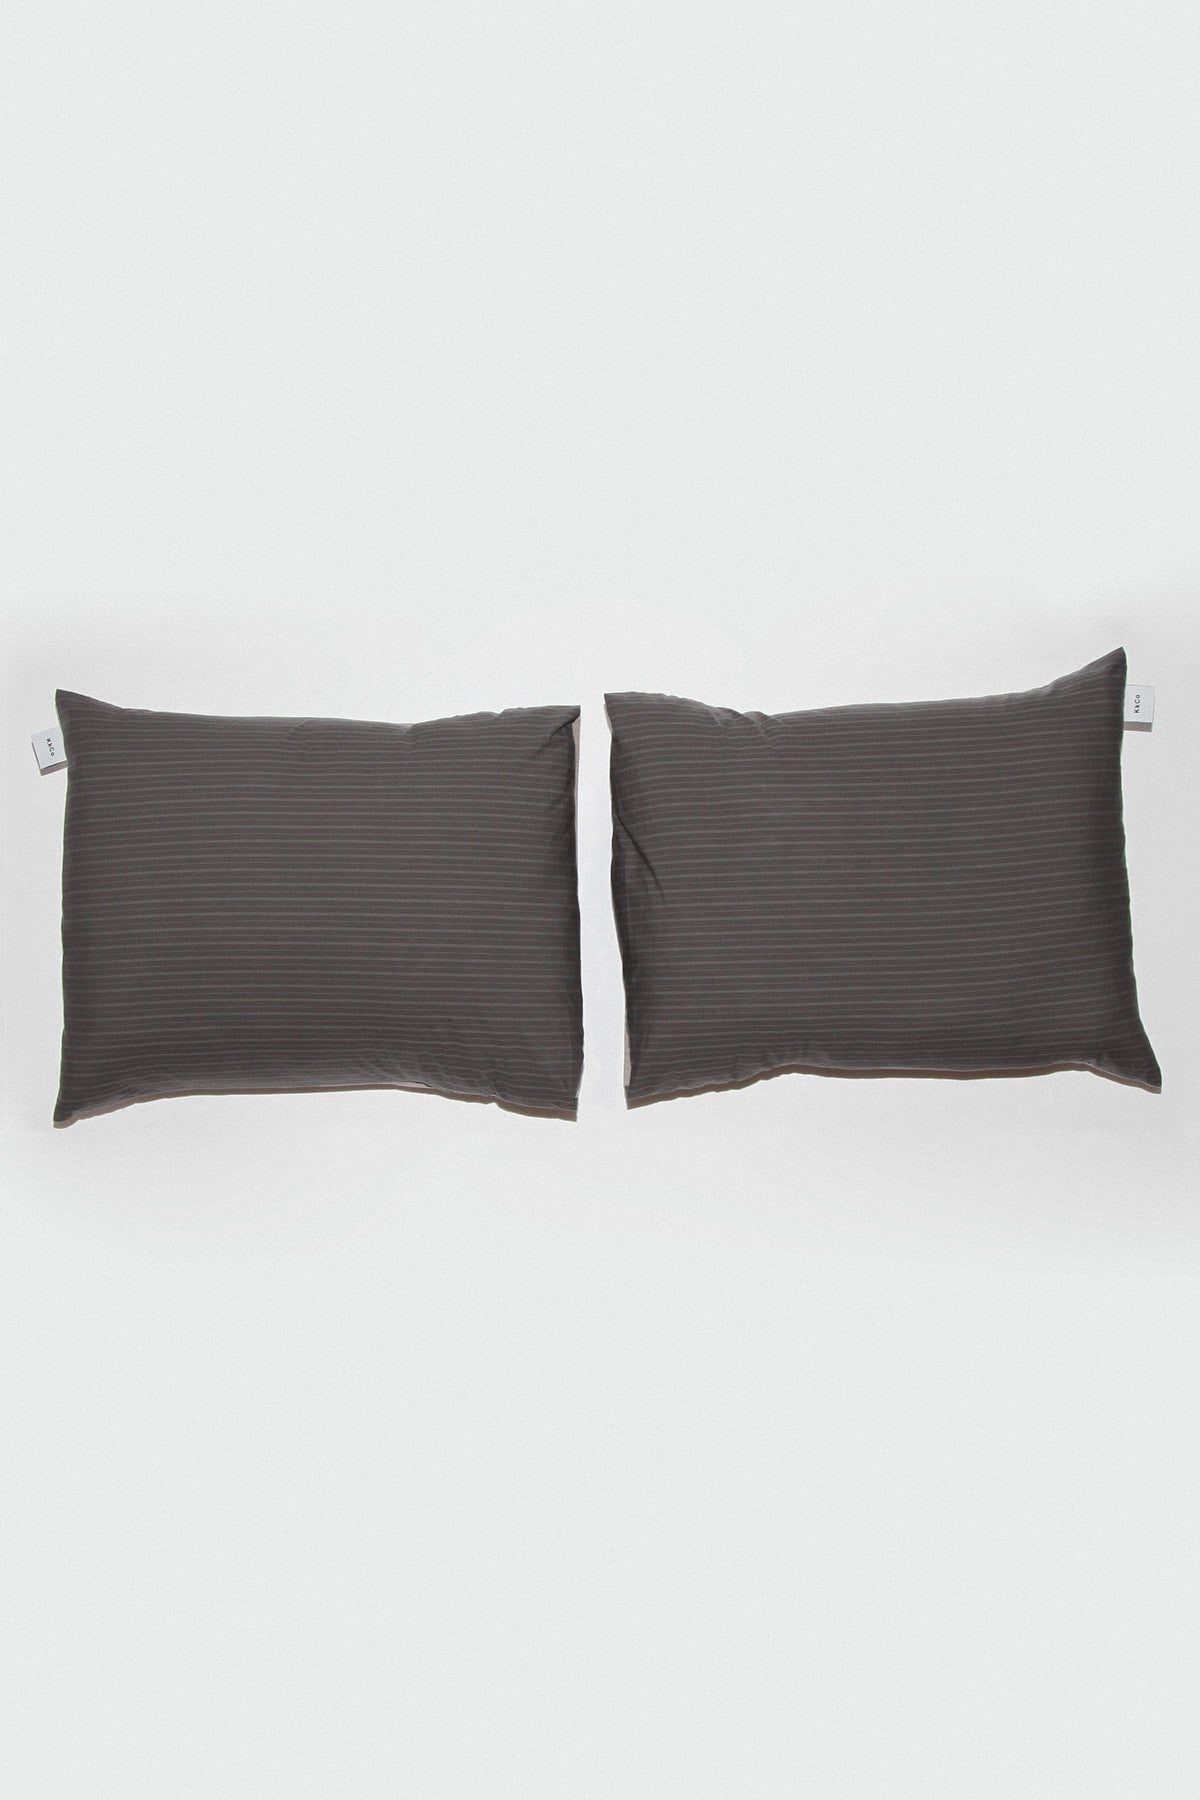 Pillow Sham Set in Mixed Striped Coal